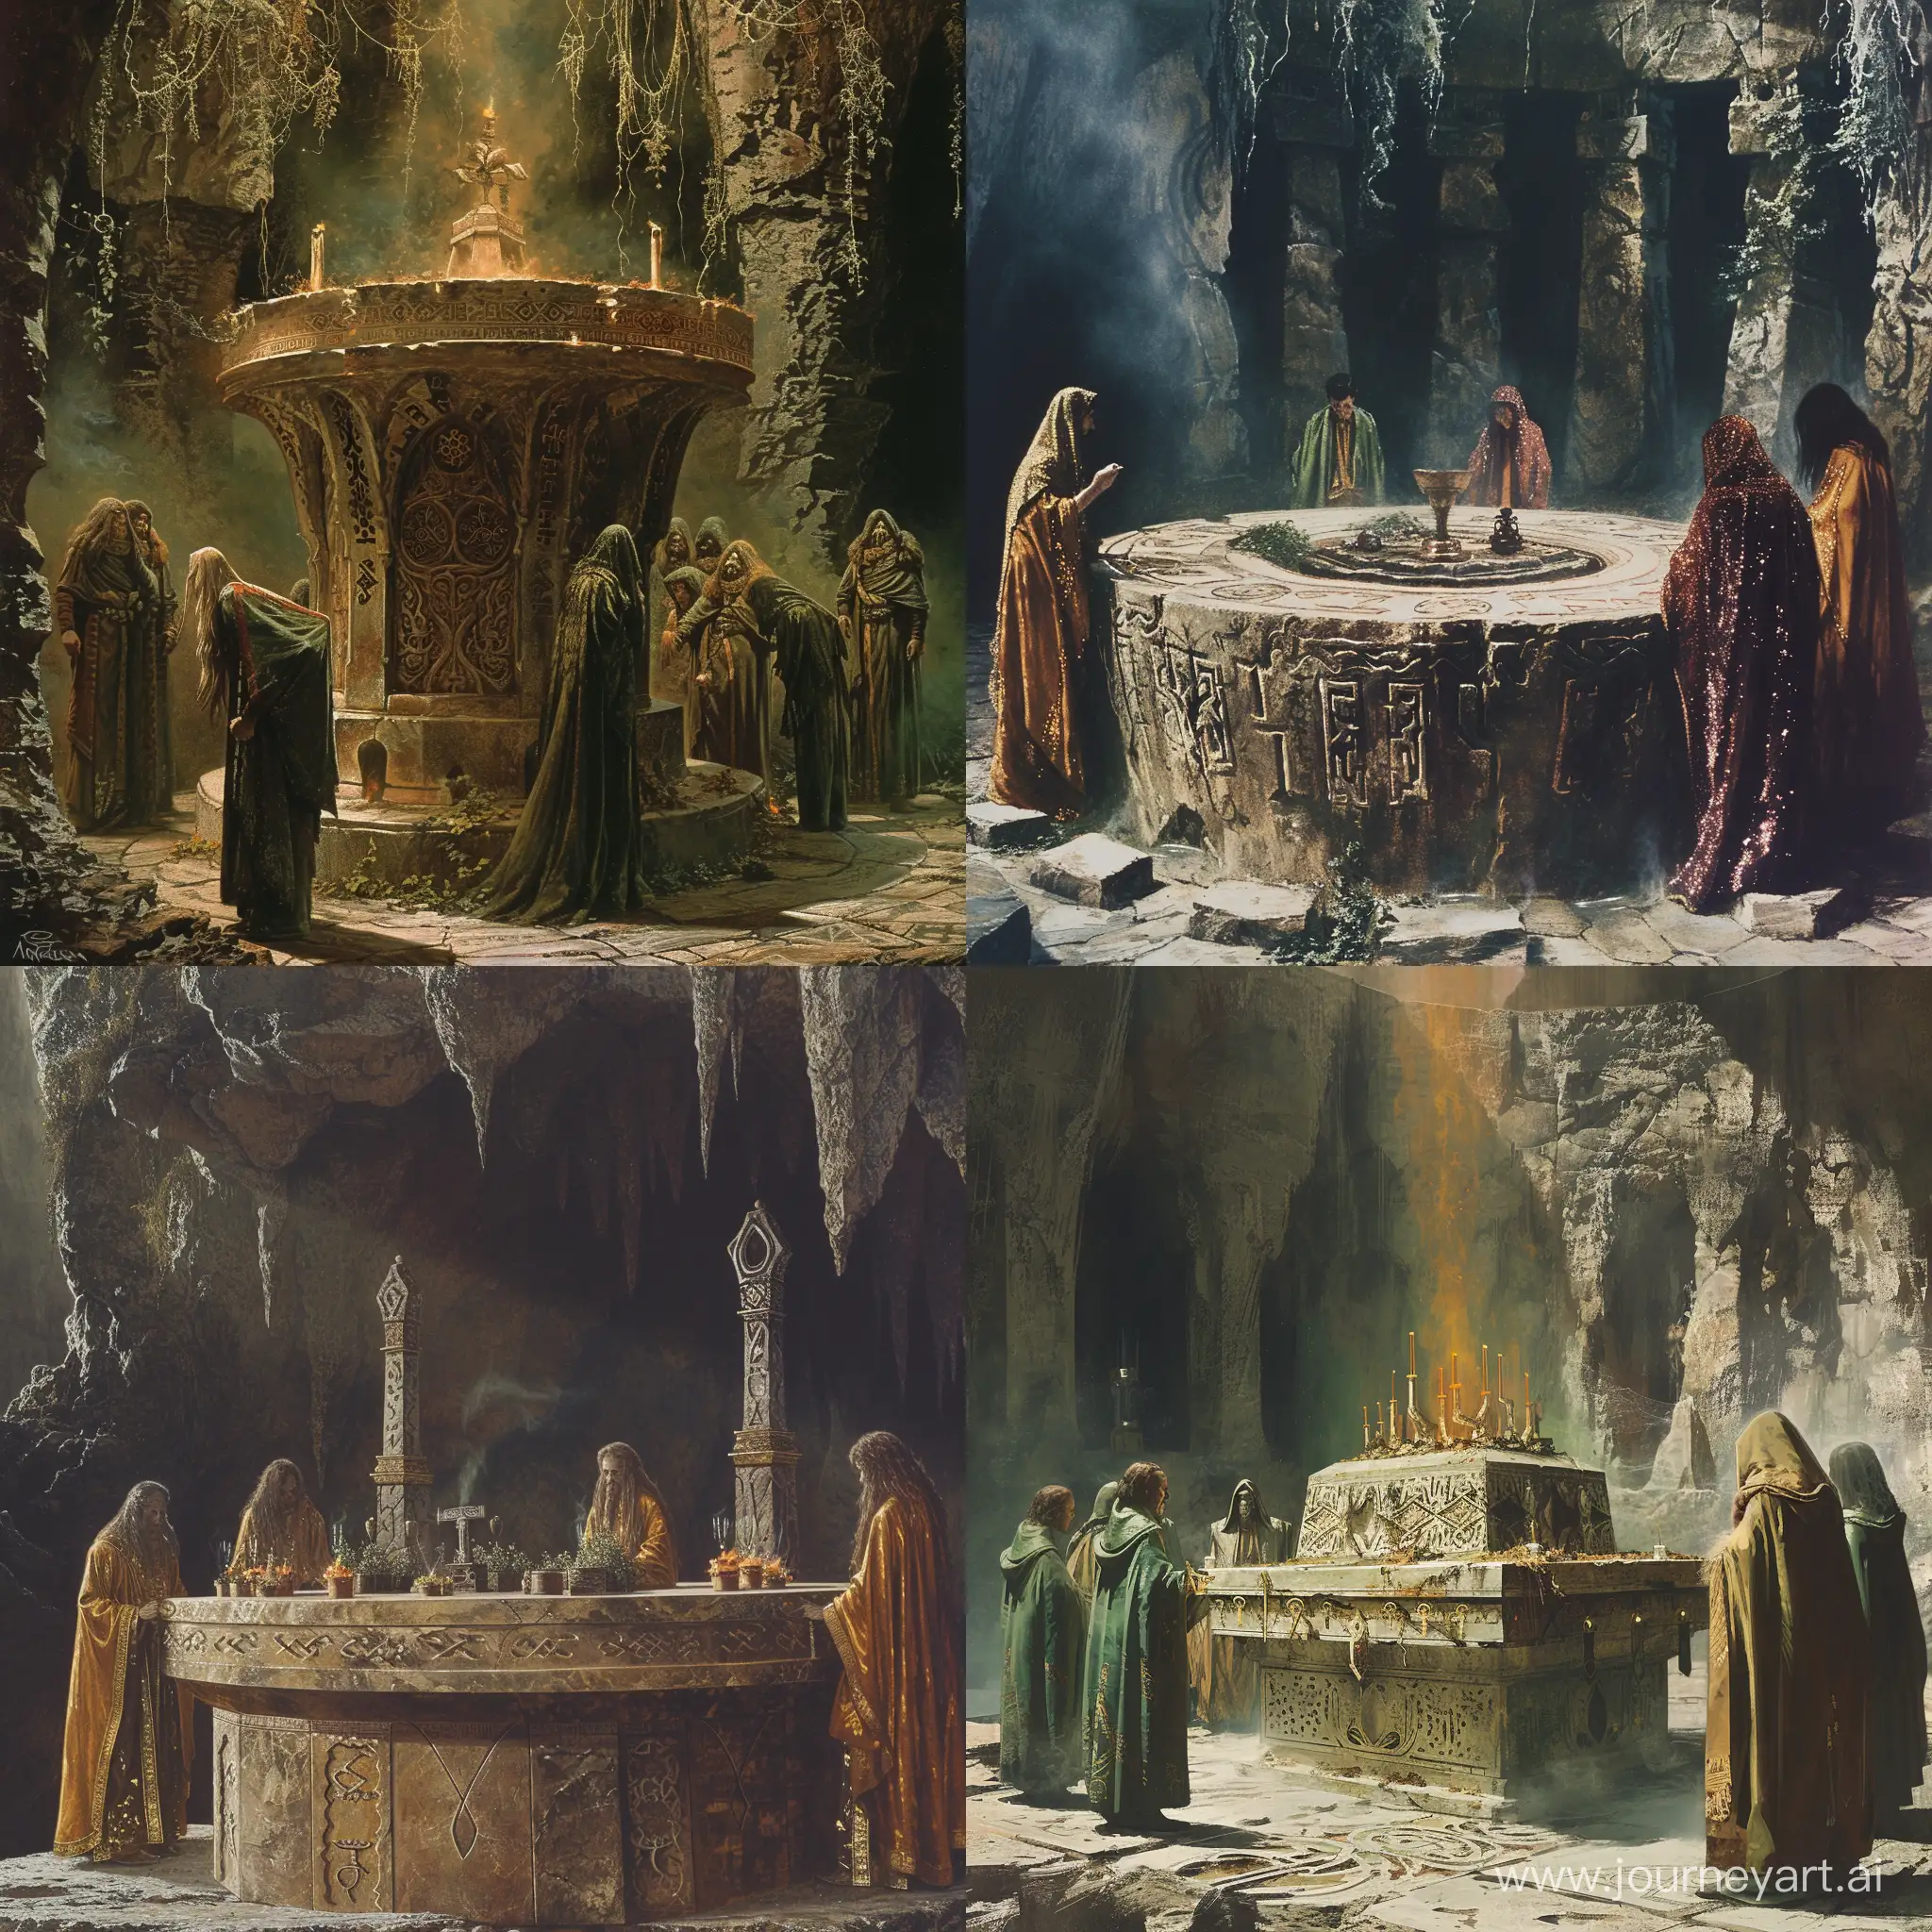 Radiant-Marble-Shrine-Tended-by-Devoted-Priests-1970s-Dark-Fantasy-Art